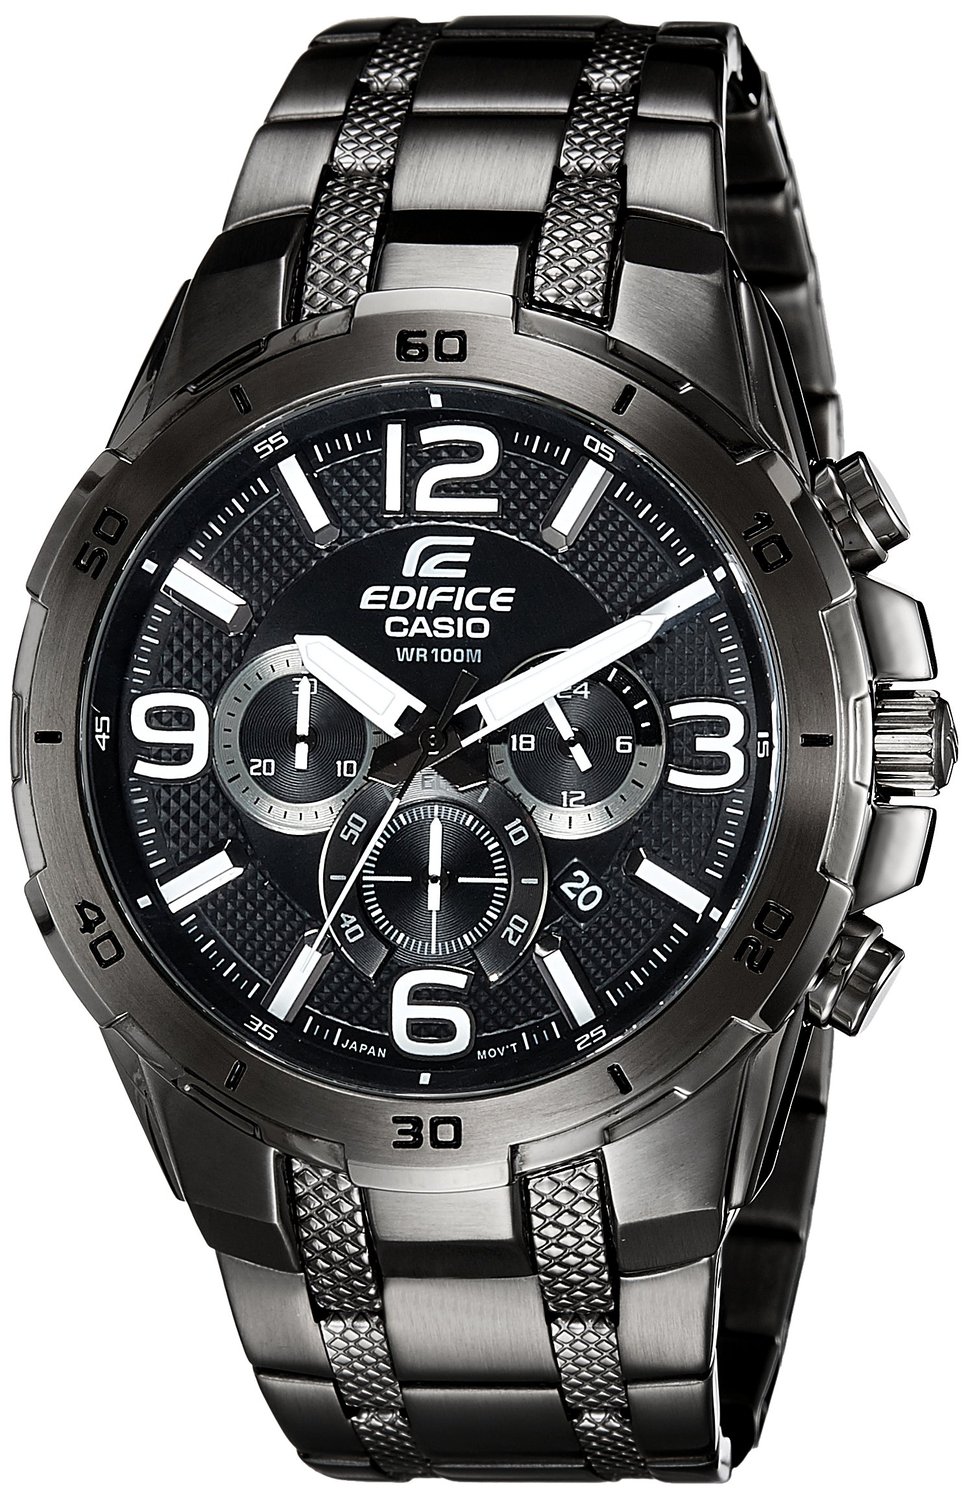 Casio Edifice WR 100m Chronograph Black Dial Black Men's Watch EFR538BK